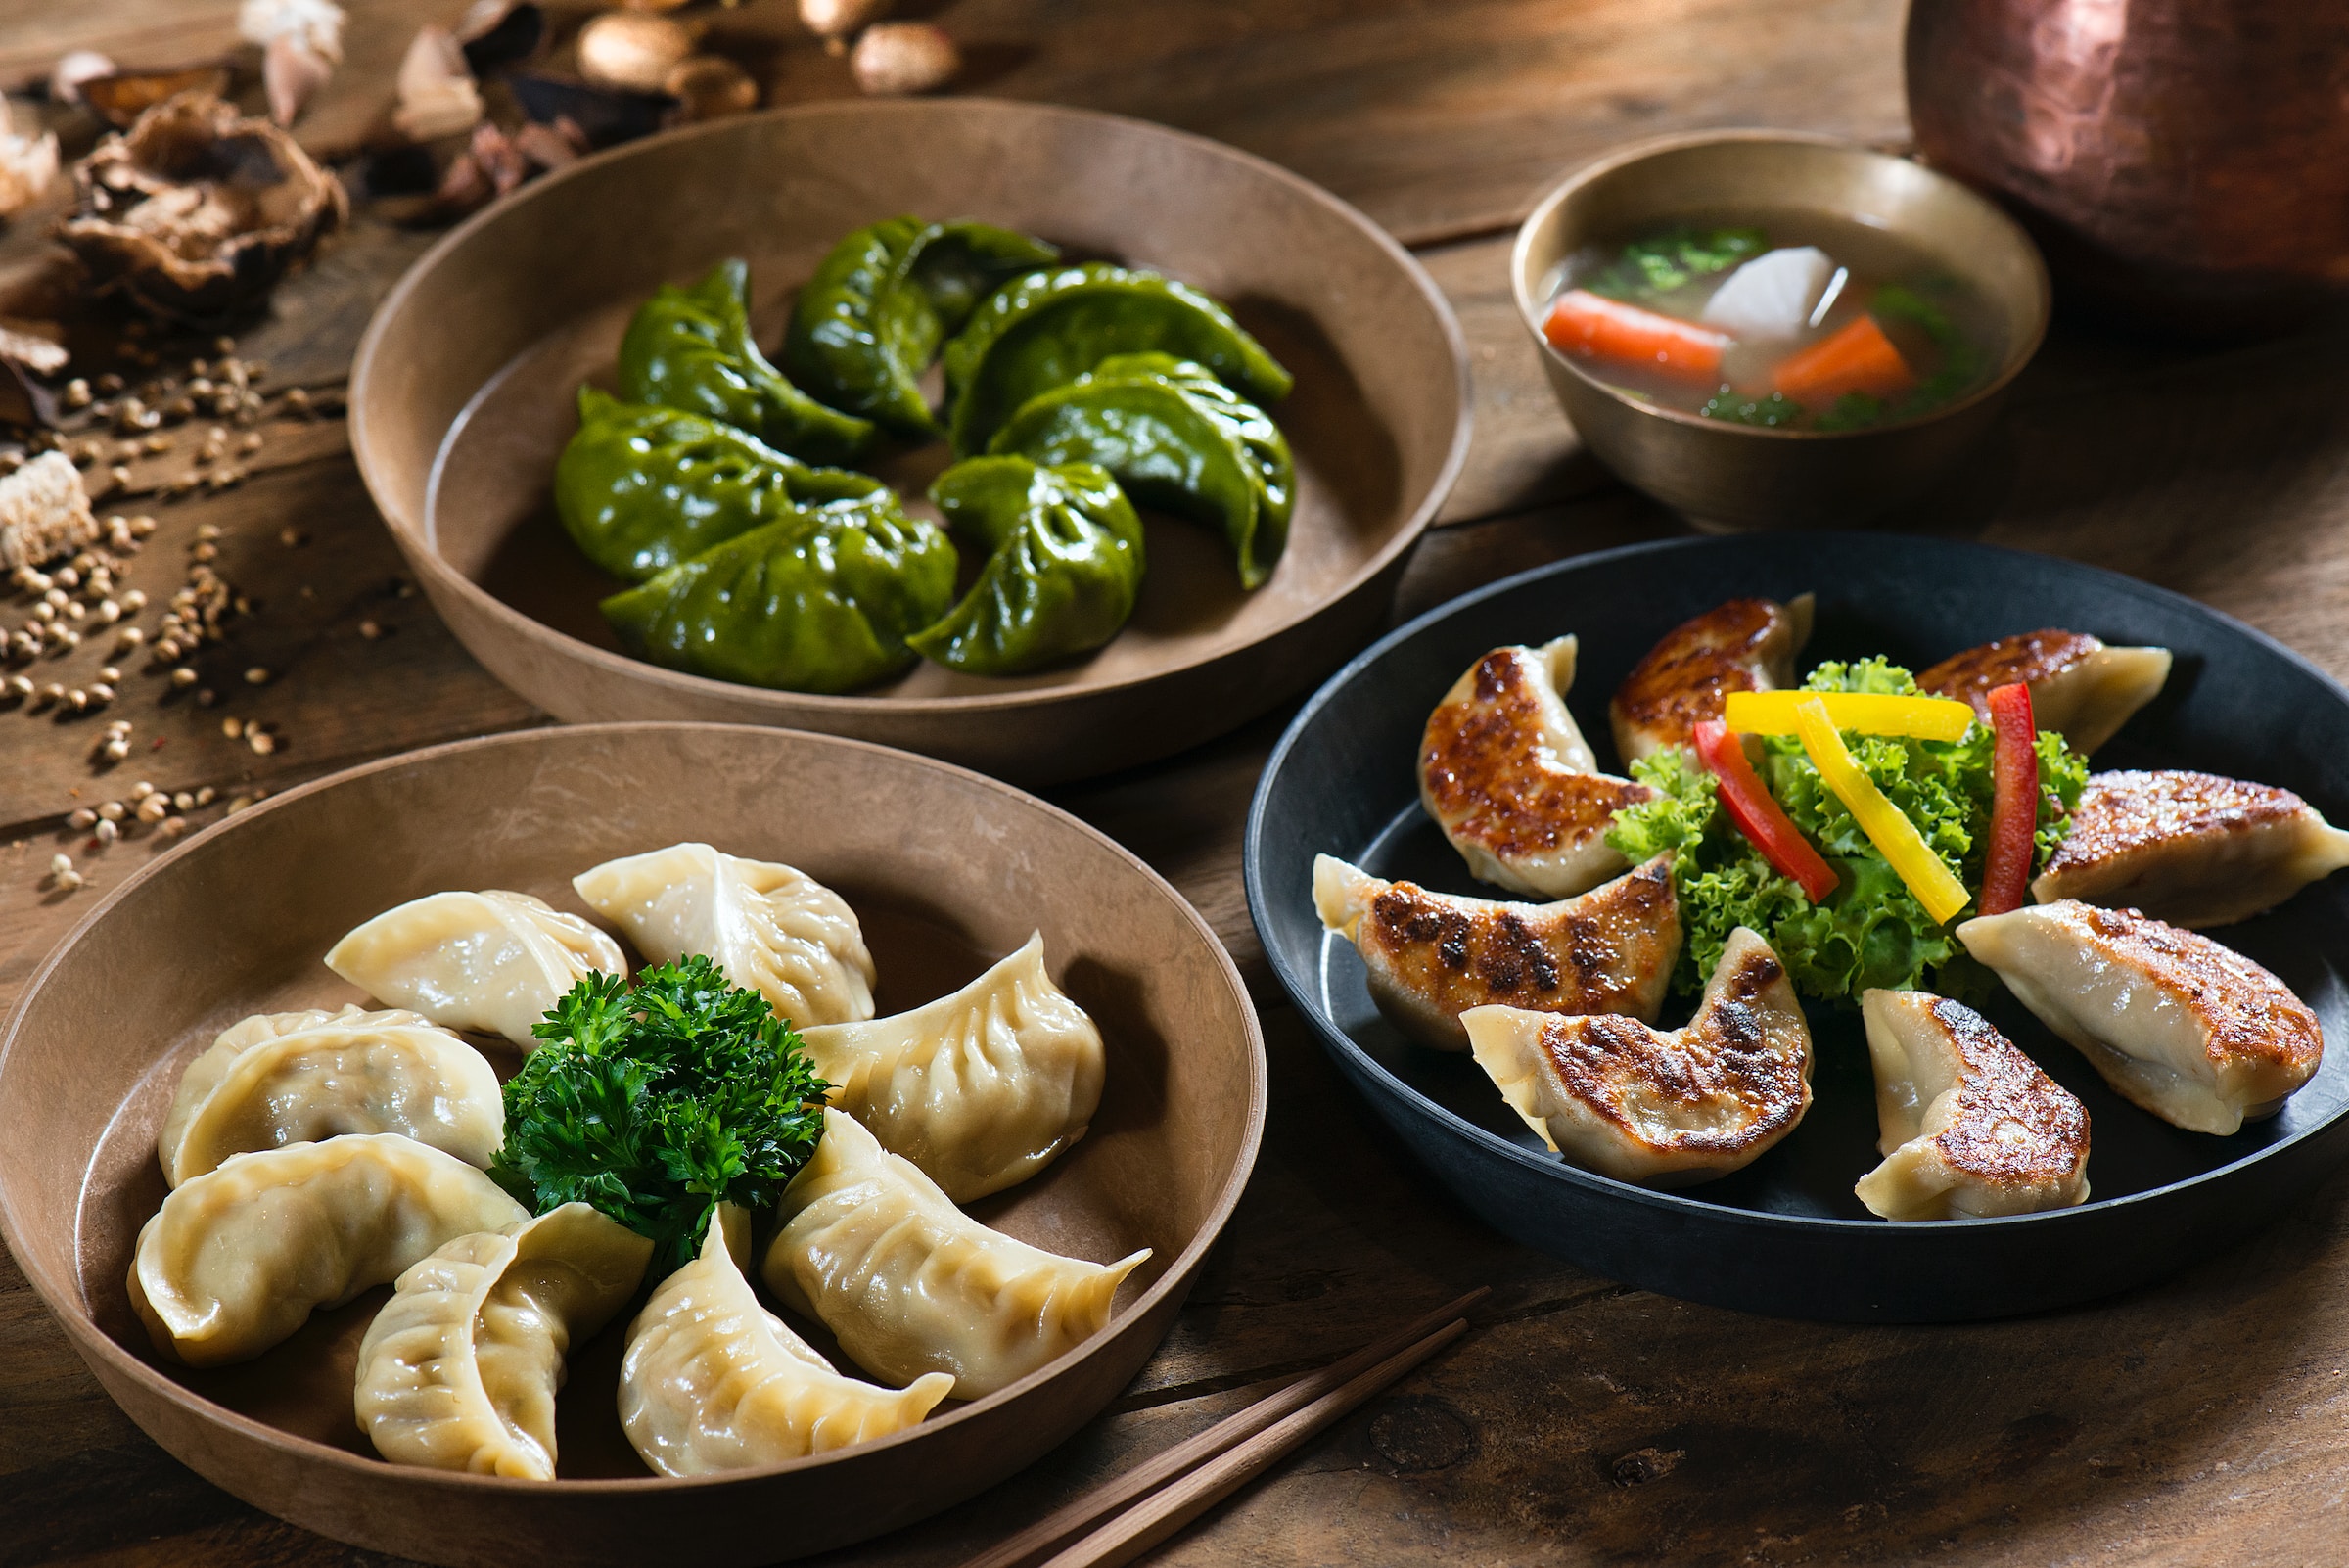 Three dumpling dishes | Source: Unsplash